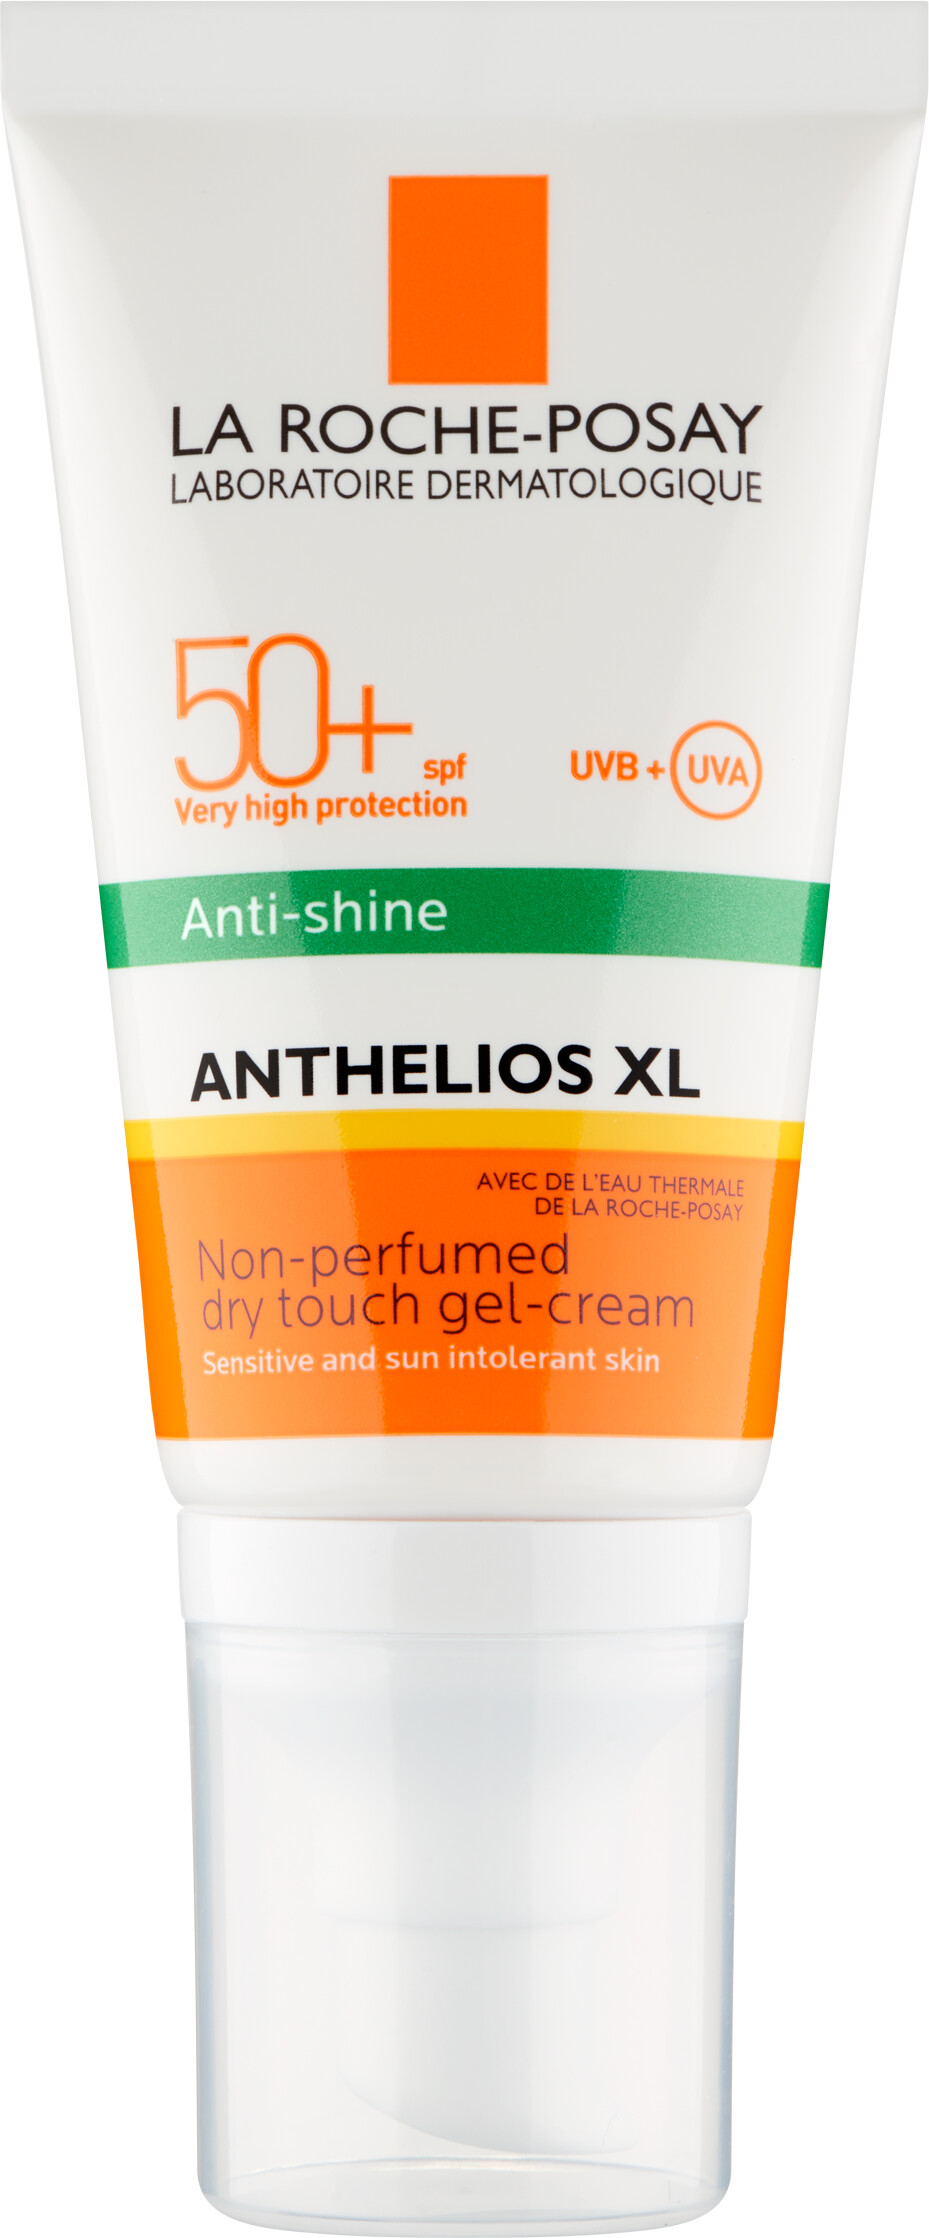 [CHÍNH HÃNG] Kem Chống Nắng La Roche Posay Anthelios Xl Dry Touch Gel-Cream Anti-Shine SPF50+